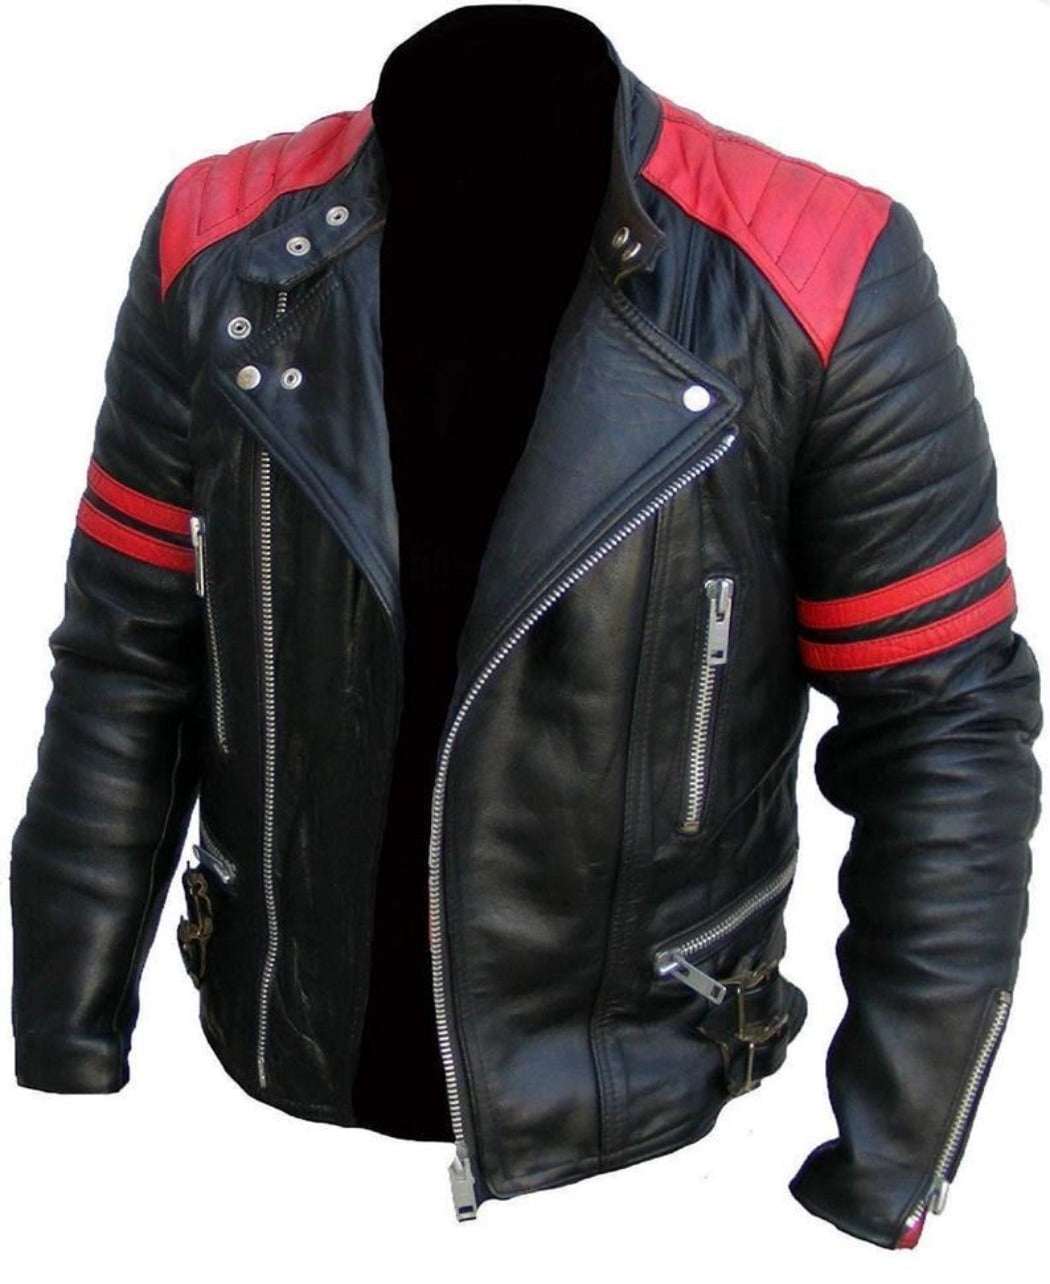 Noora Lambskin Black and Red Leather Biker Club Outwear Jacket Warm Leather Jacket for Men - Walmart.com